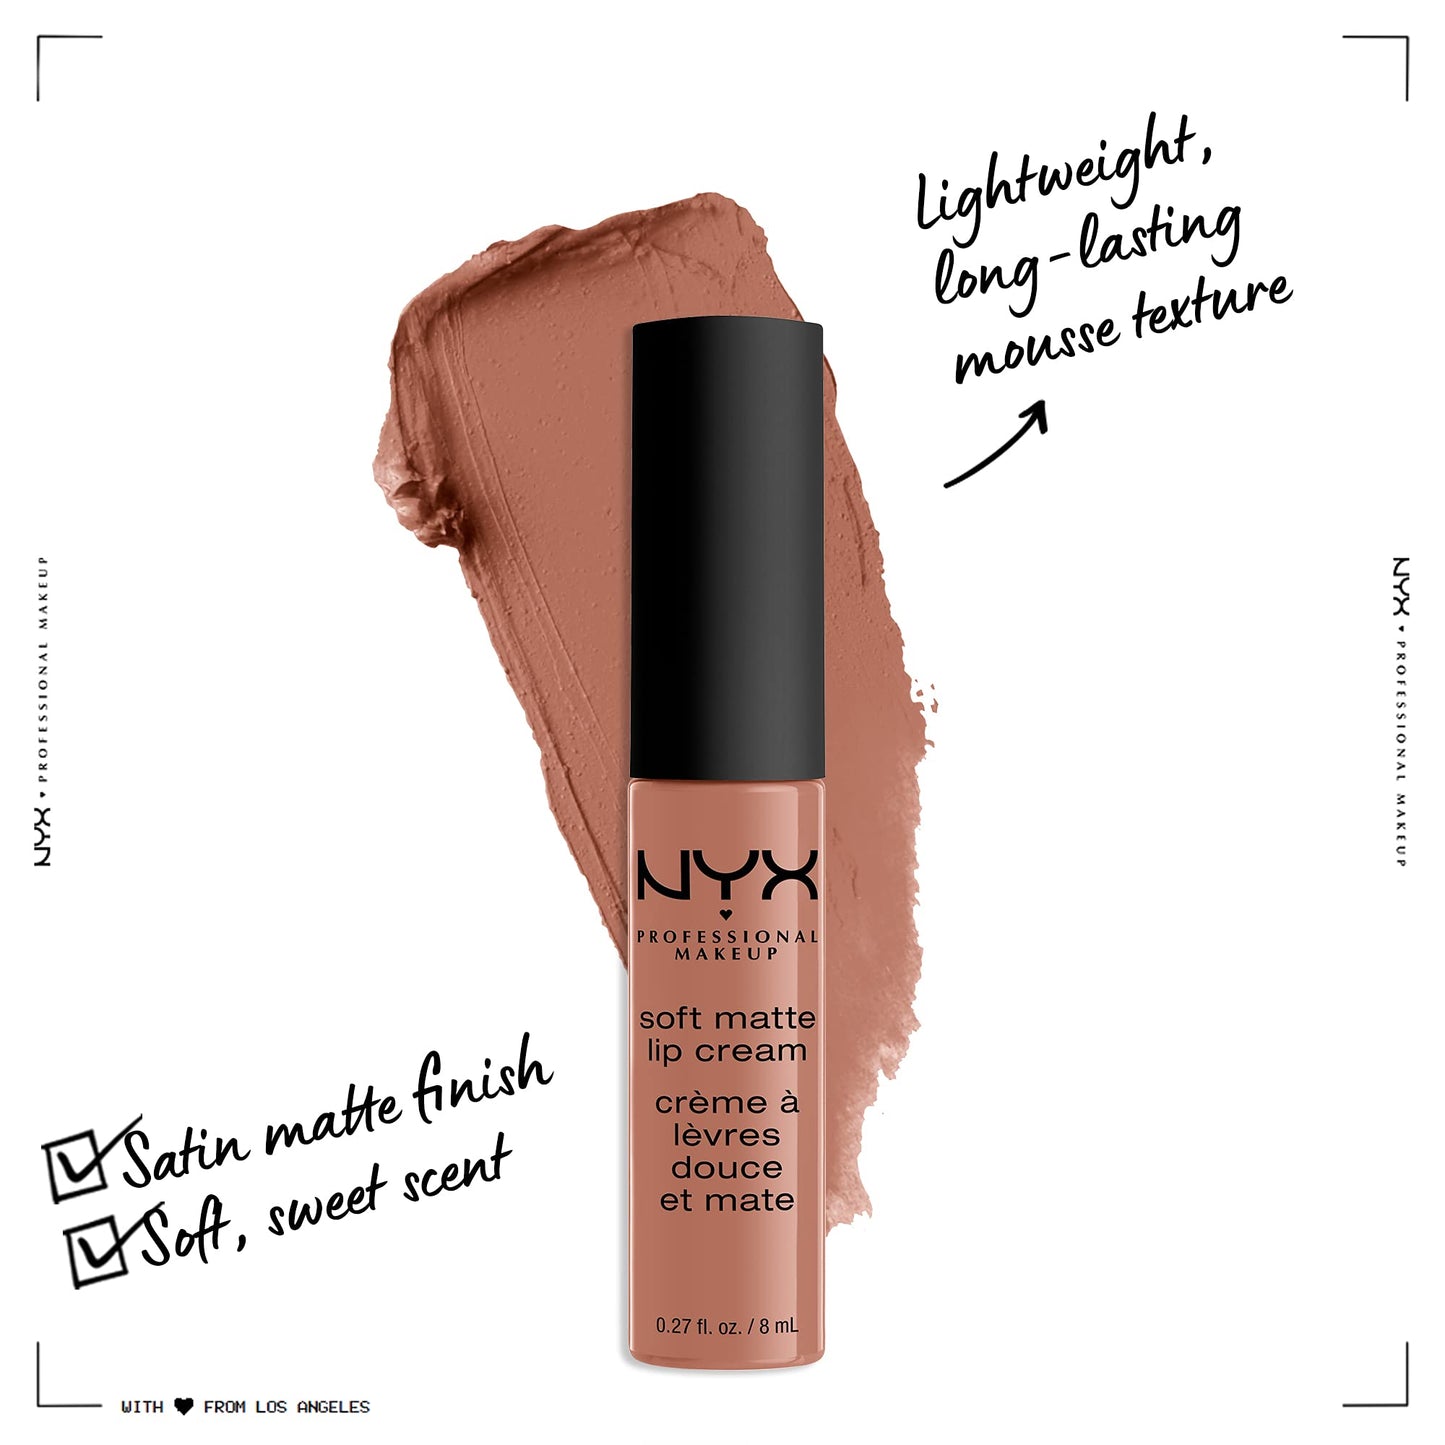 NYX PROFESSIONAL MAKEUP Soft Matte Lip Cream, Lightweight Liquid Lipstick - Abu Dhabi (Deep Rose-Beige)